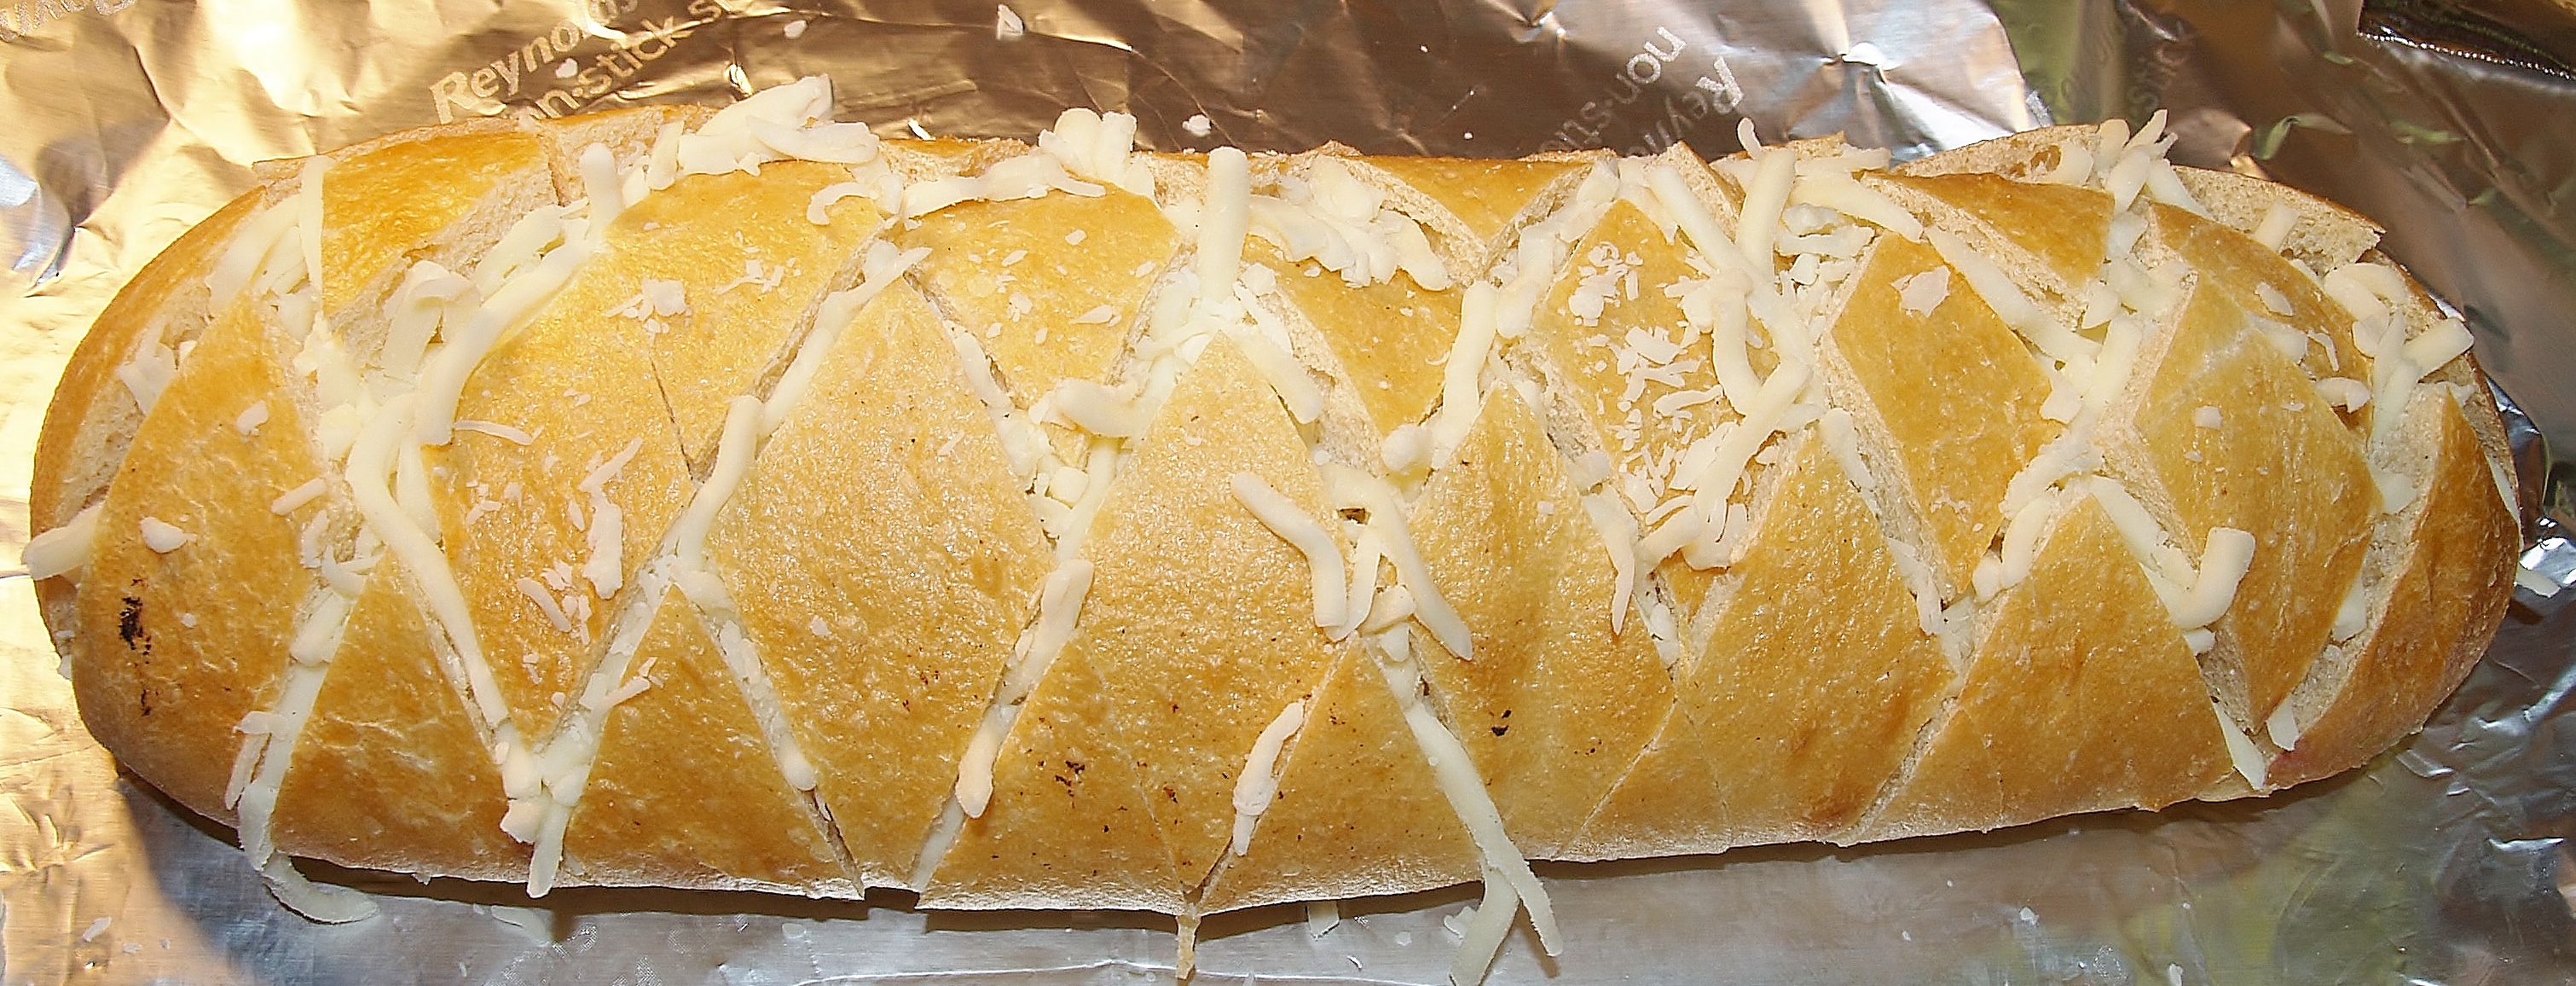 Cheesy Gooey Goodness in a loaf / Kelli's Retro Kitchen Arts